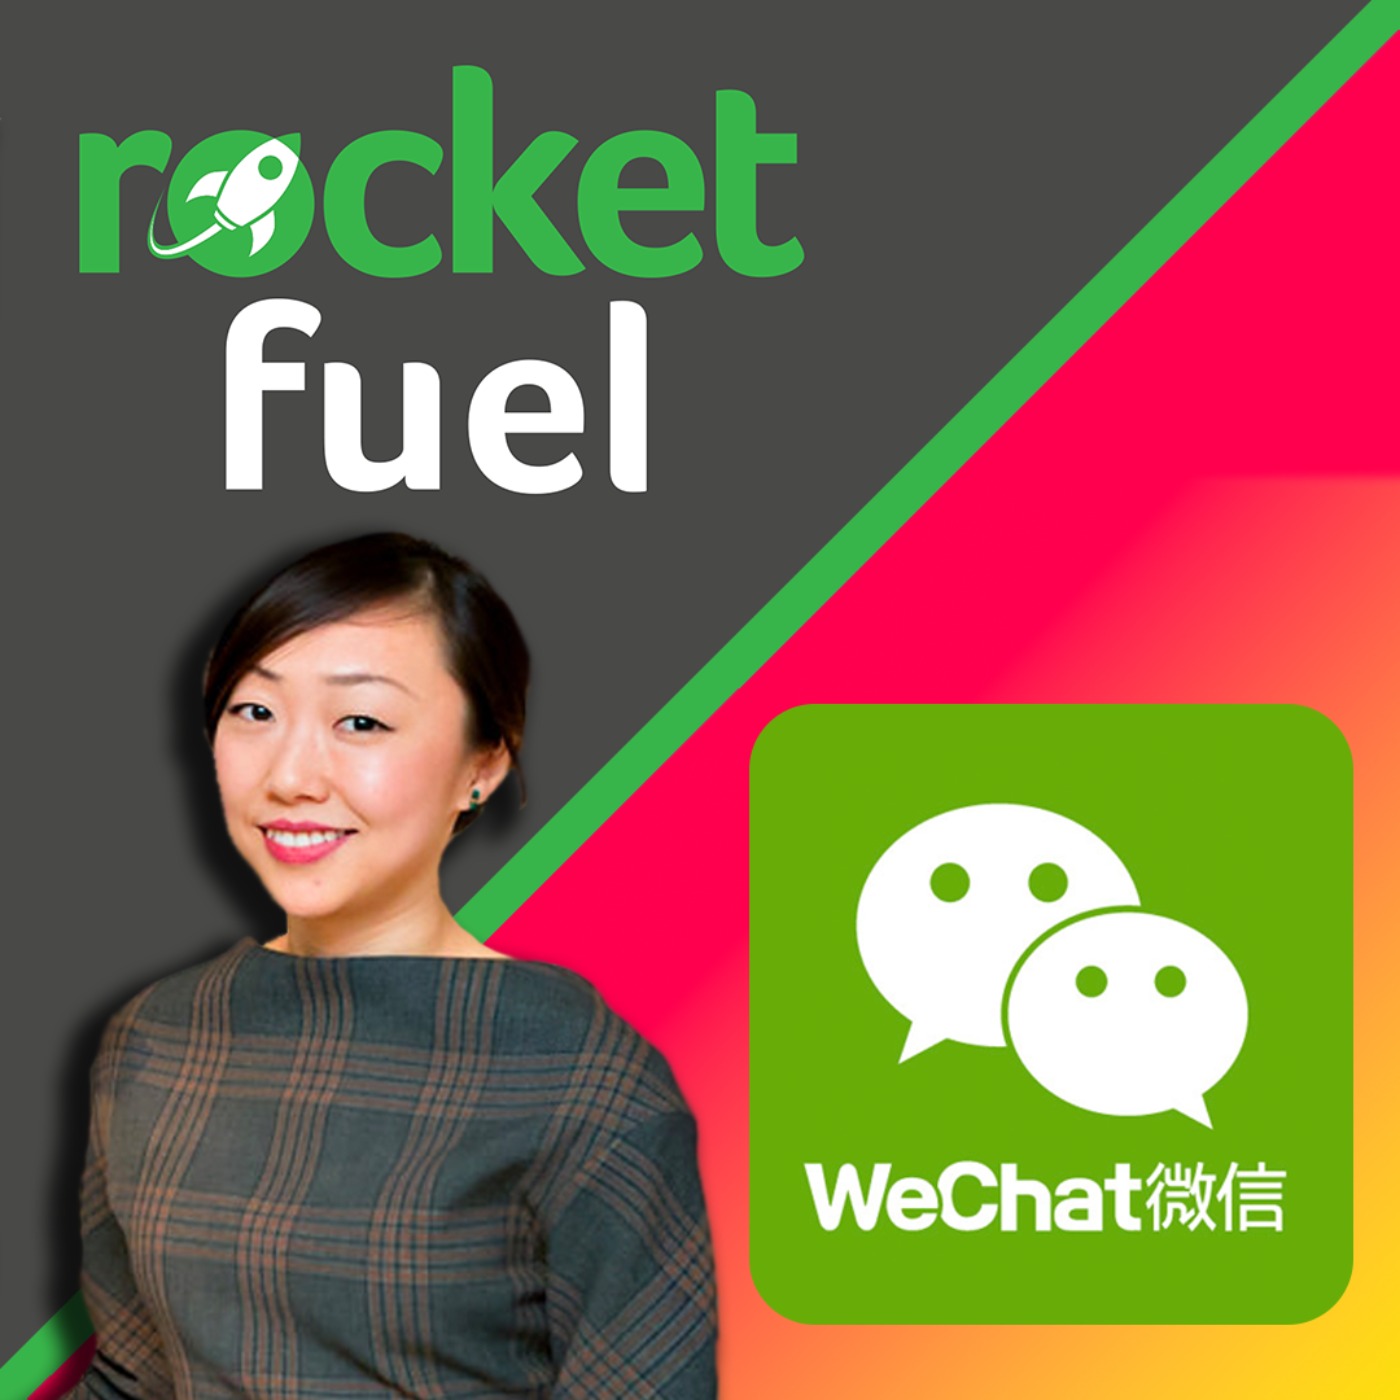 China Youth Marketing: WeChat to TikTok (Alicia Liu)